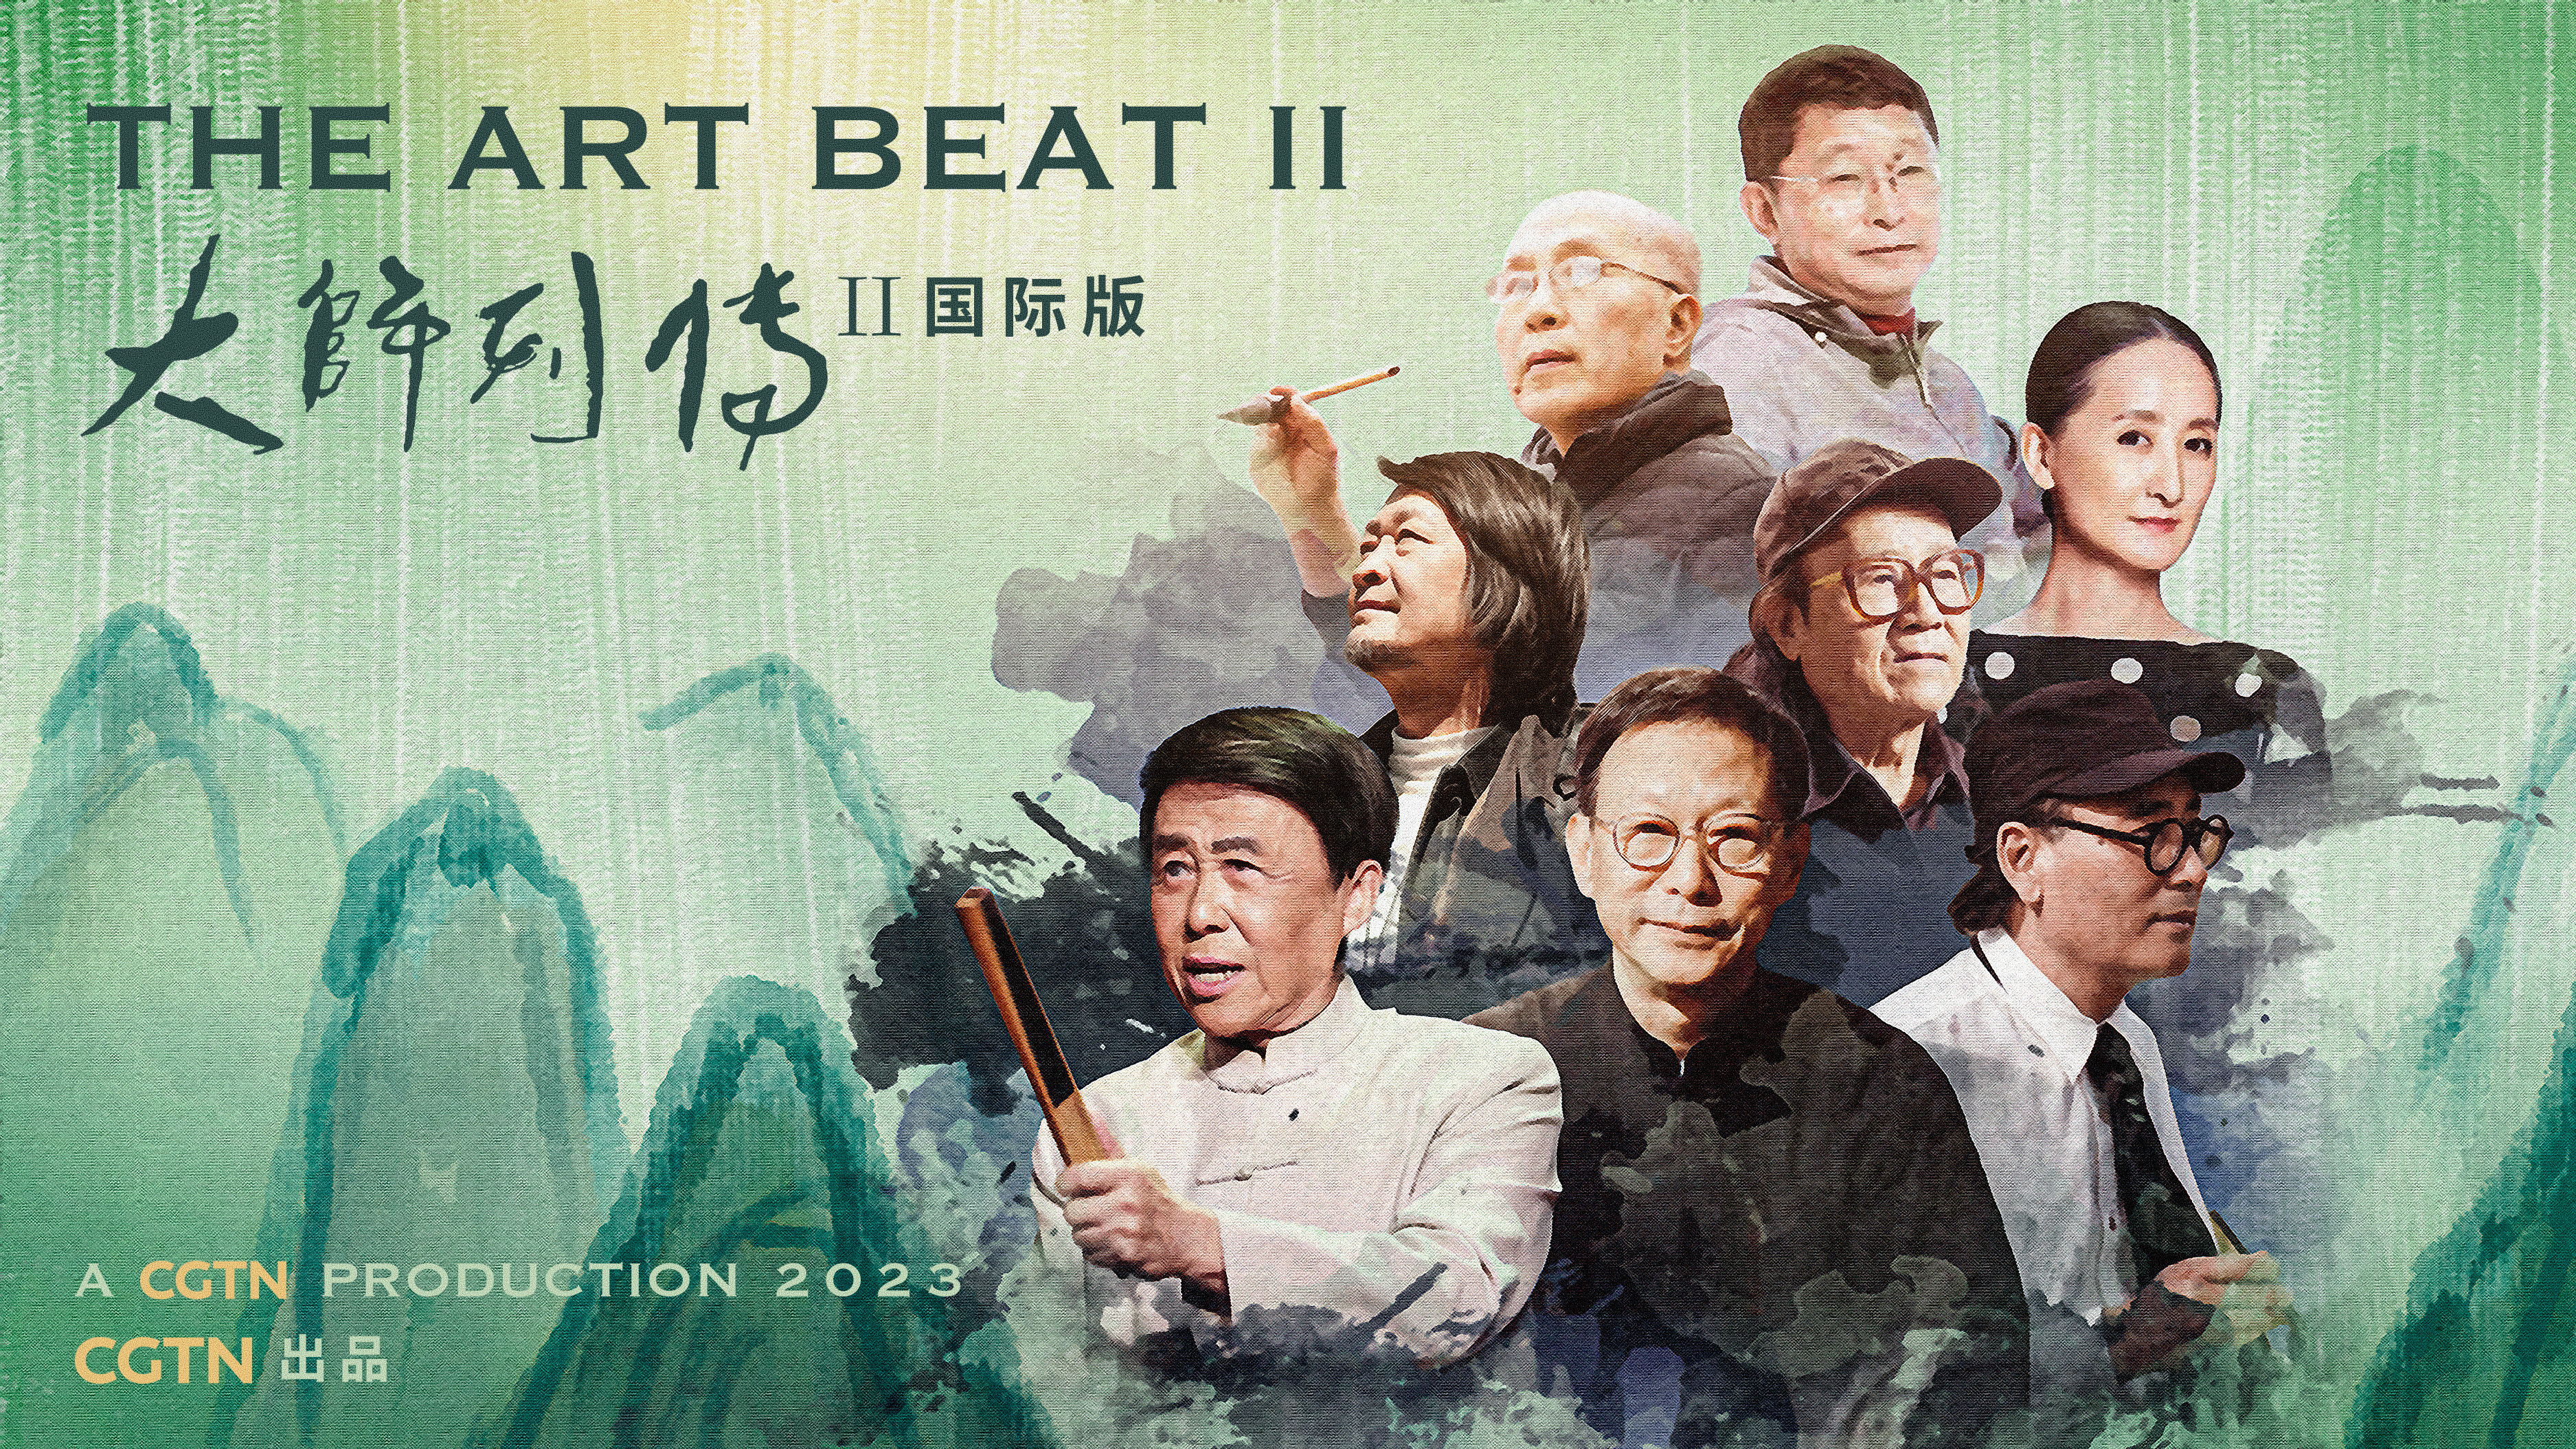 Coming soon! Season 2 of CGTN Documentary's 'The Art Beat'